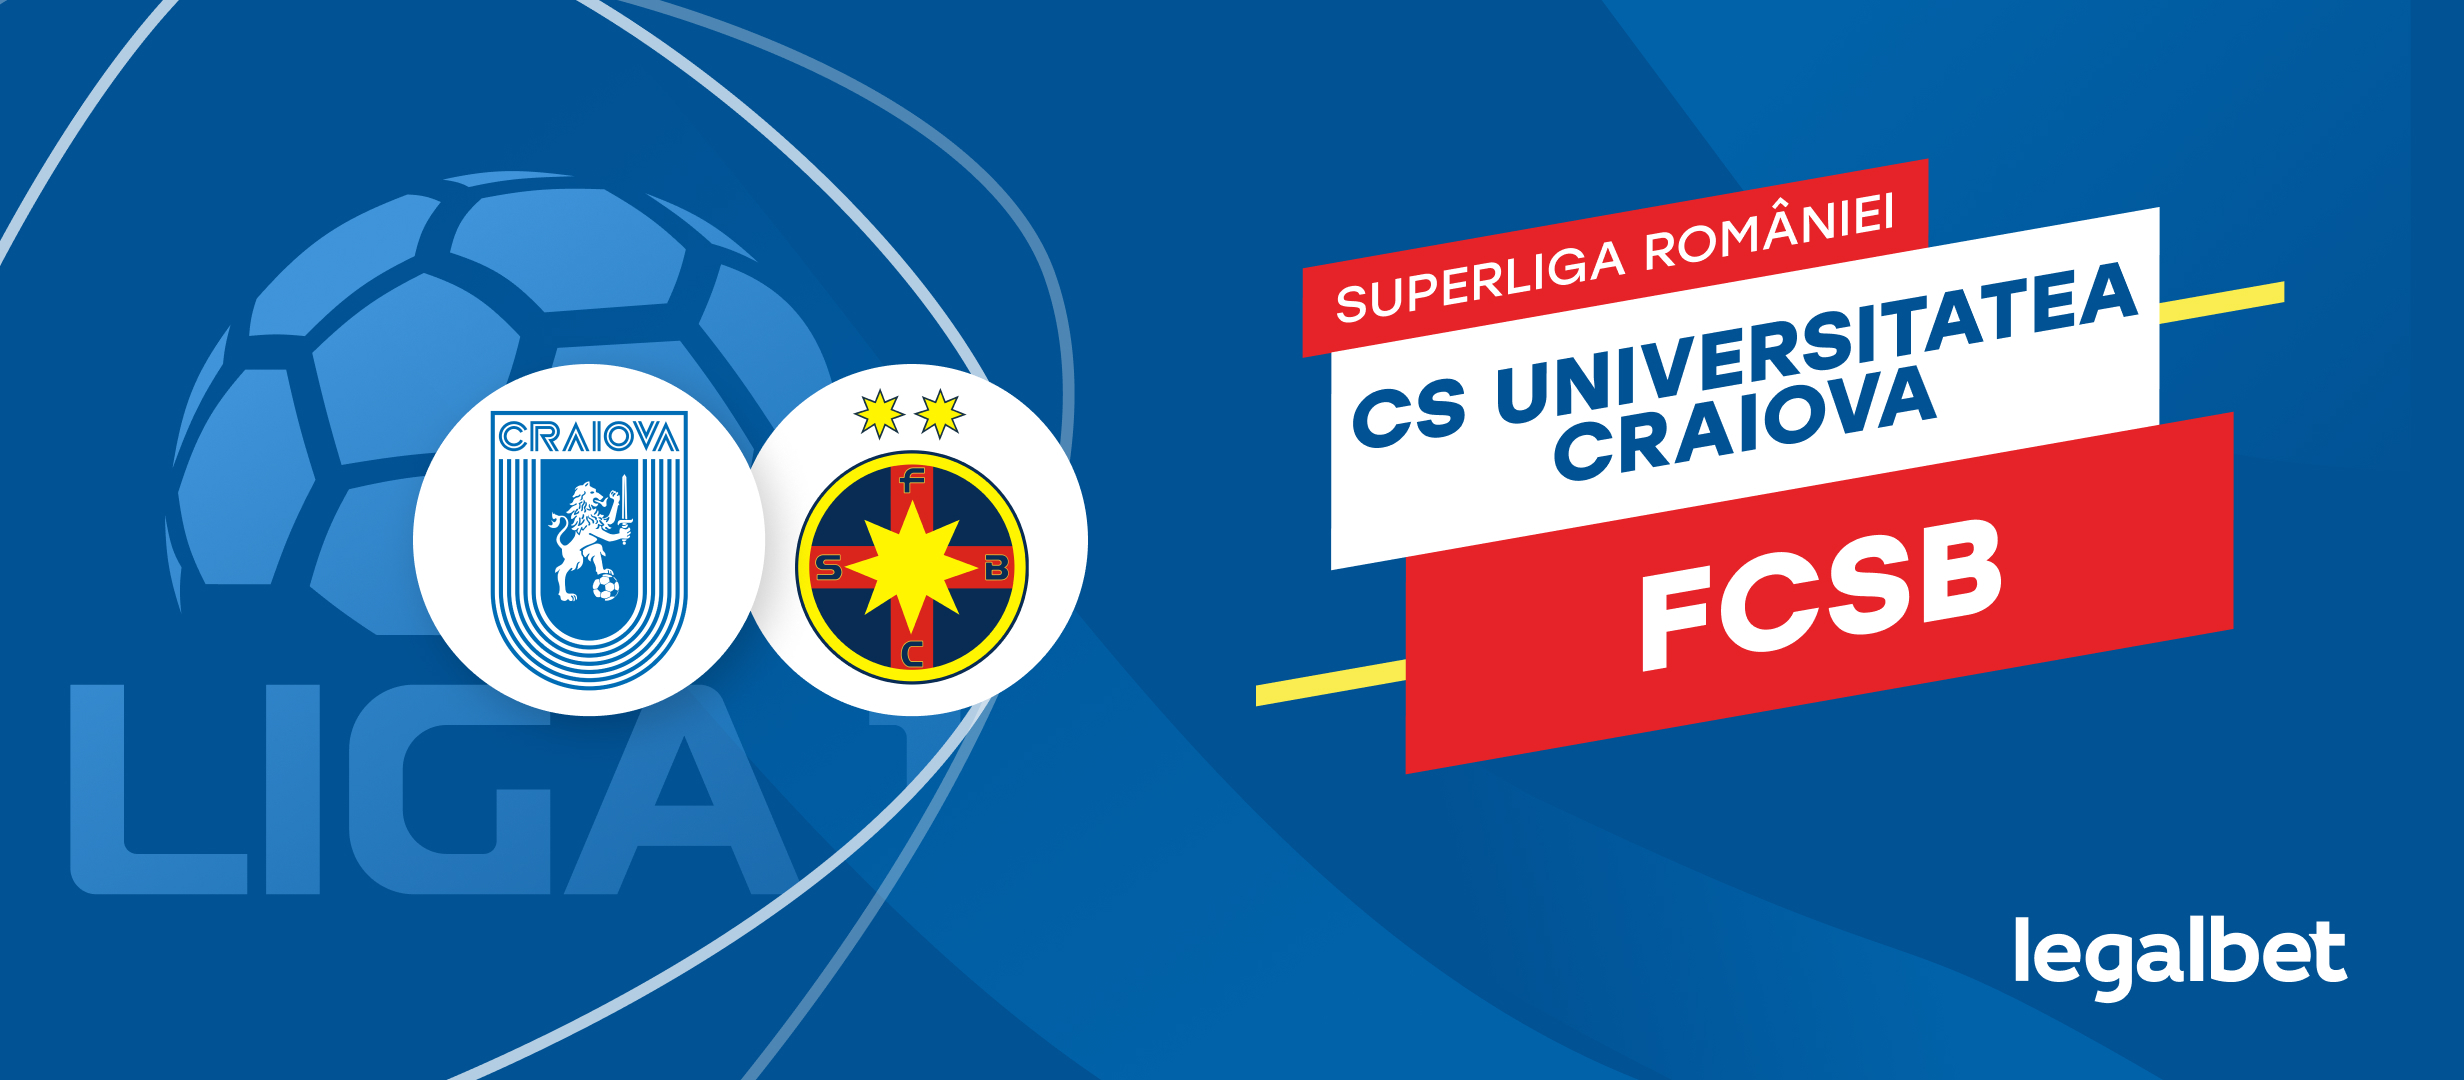 Universitatea Craiova - FCSB: Ponturi si cote la pariuri